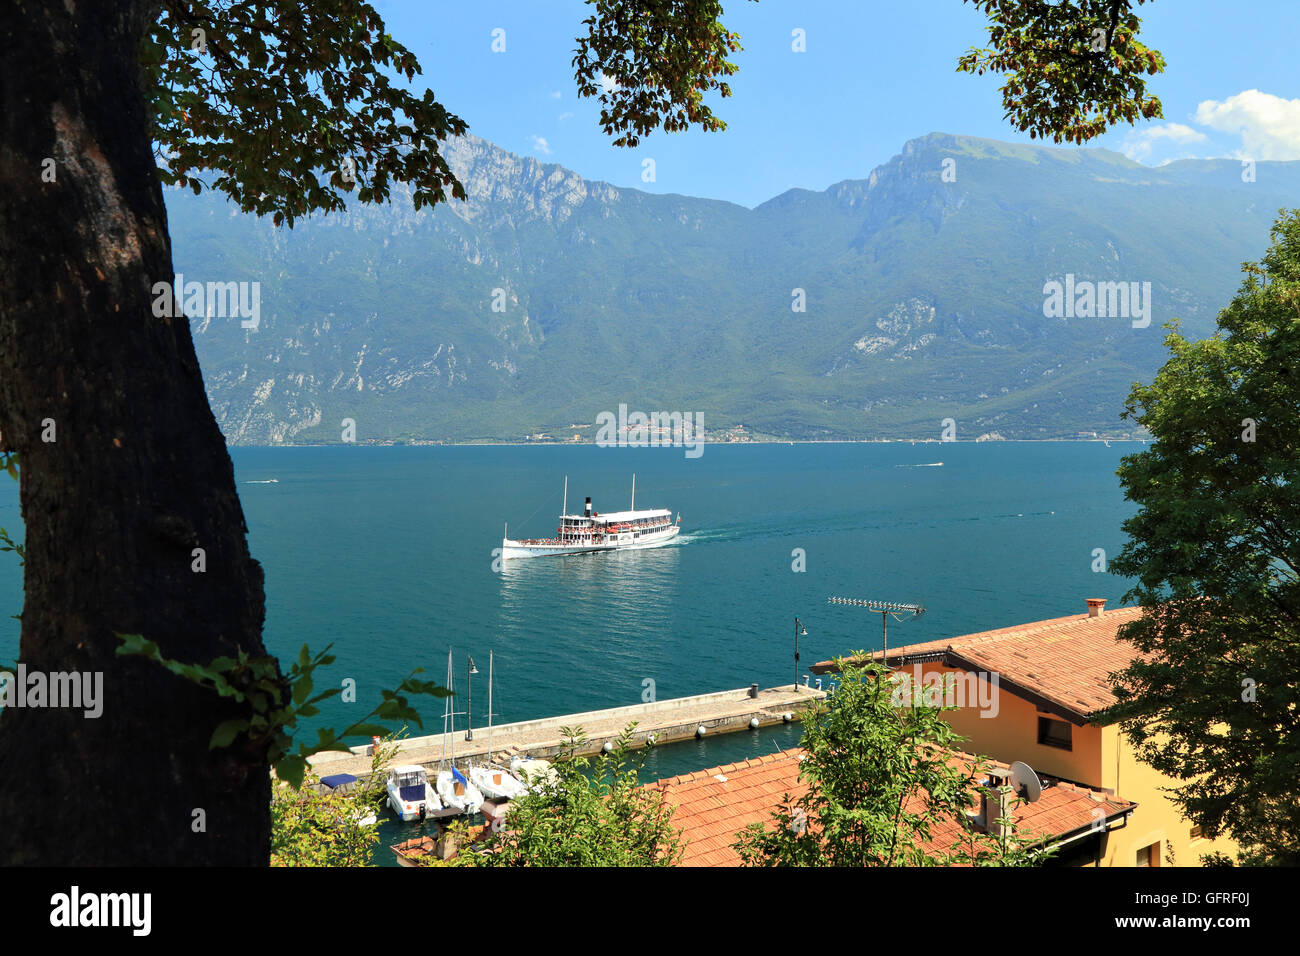 Paddle barco de vapor "Giuseppe Zanardelli' en el Lago de Garda, Italia. Foto de stock